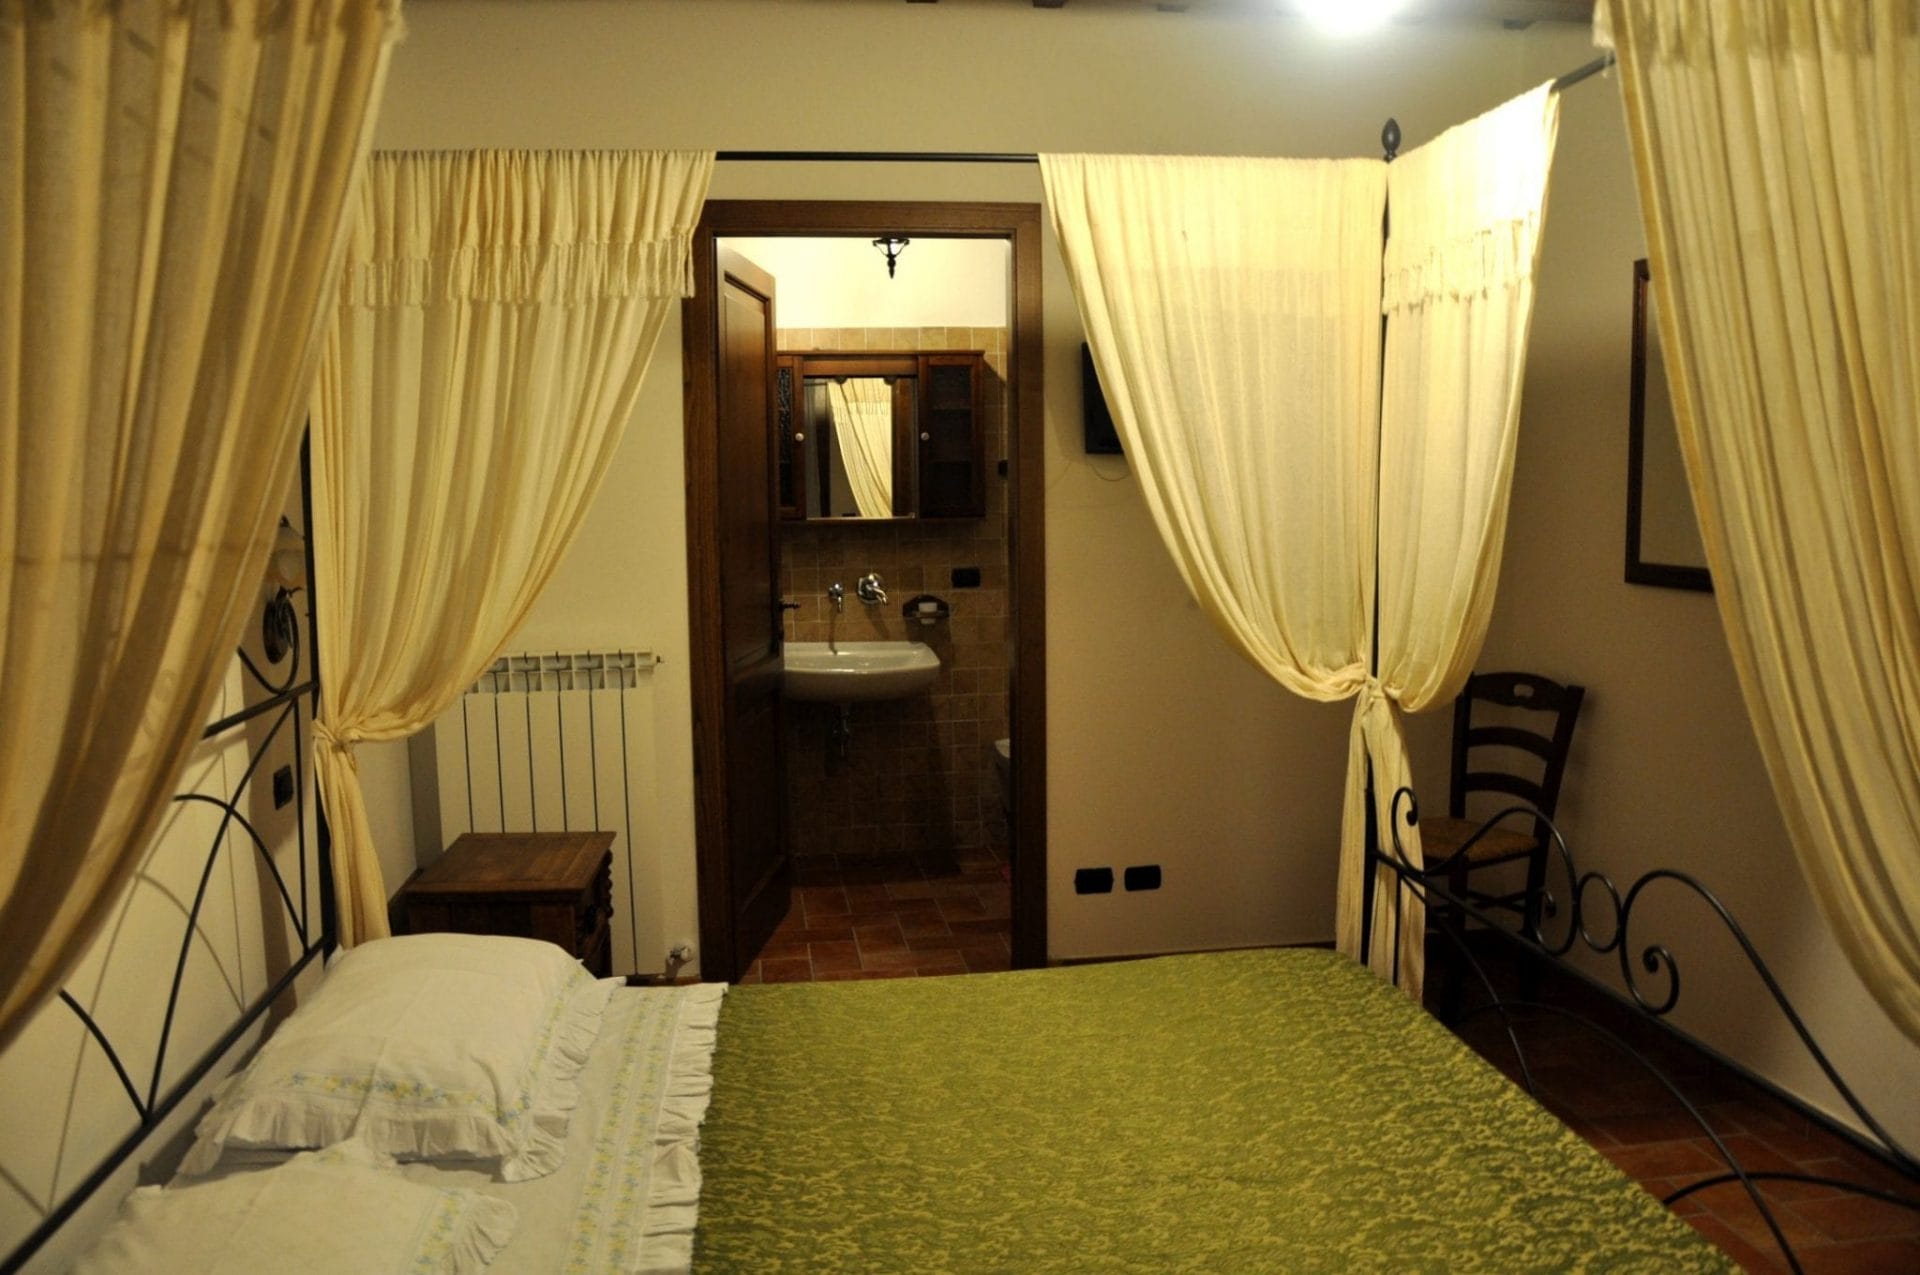 Accommodation at an Italian farm-stay